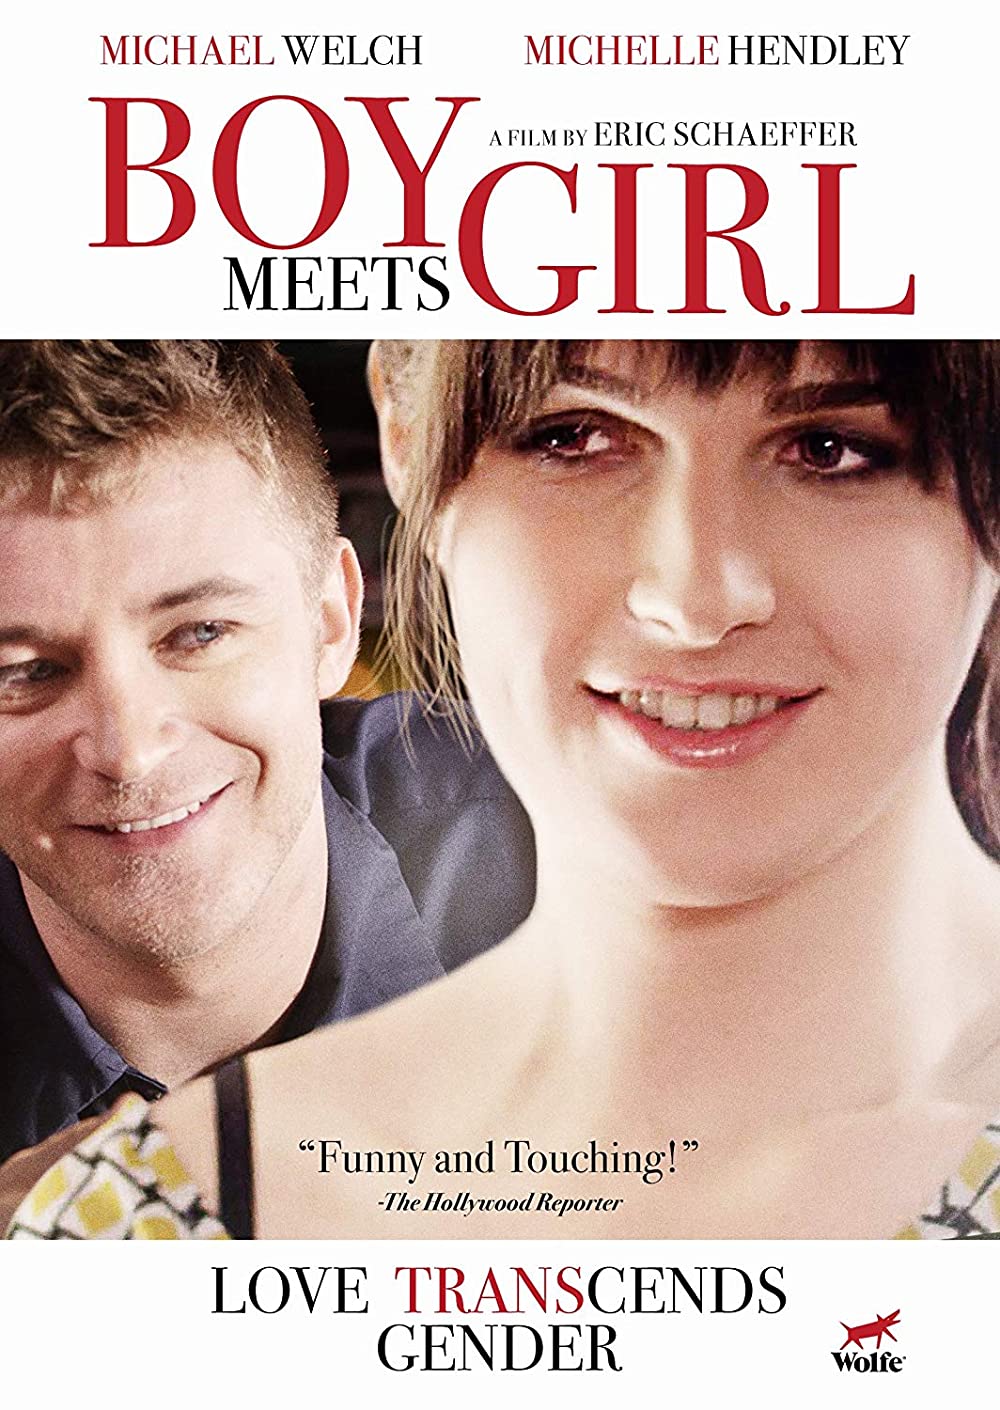 Filmbeschreibung zu Boy meets Girl (OV)